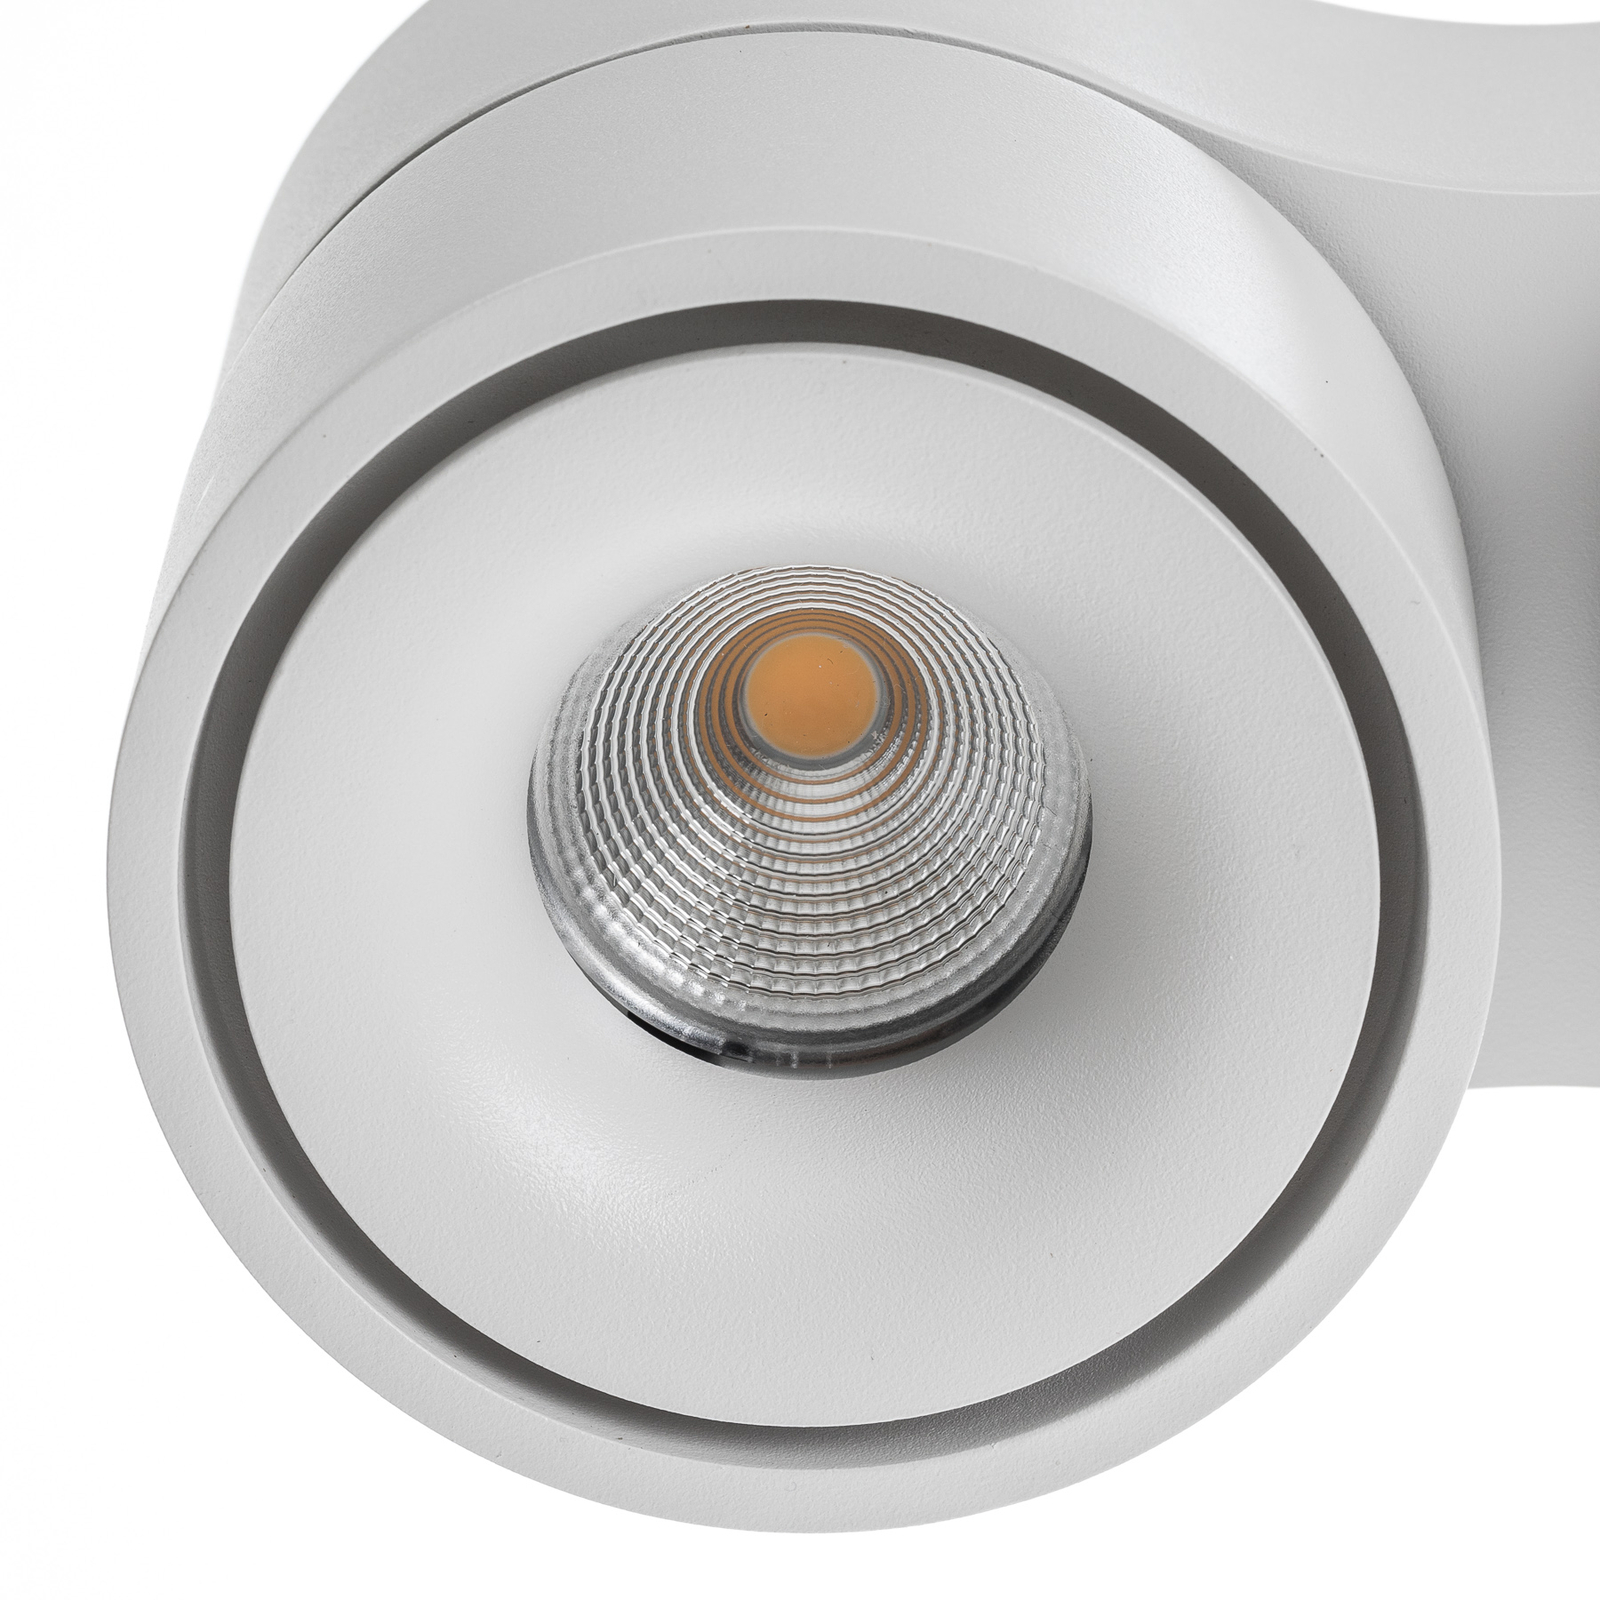 Egger Clippo Duo spot sufitowy LED, biały, 3 000 K